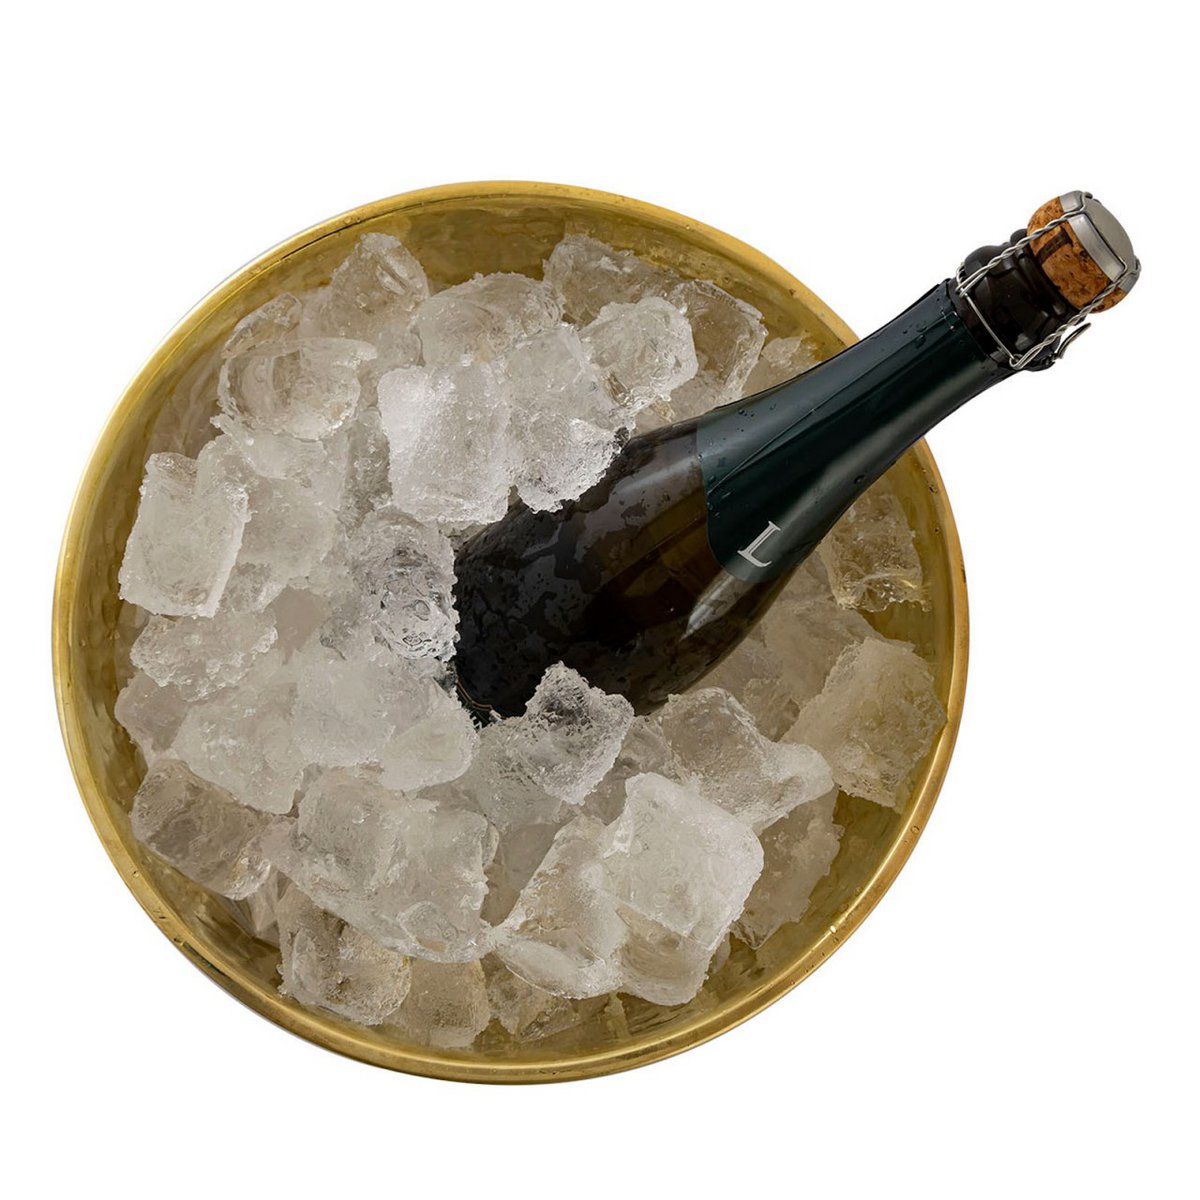 Weinkühler Flaschenkühler Metall ø 29 cm Sektkühler rund silber gold Eiskühler Champagnerkühler variant: gold